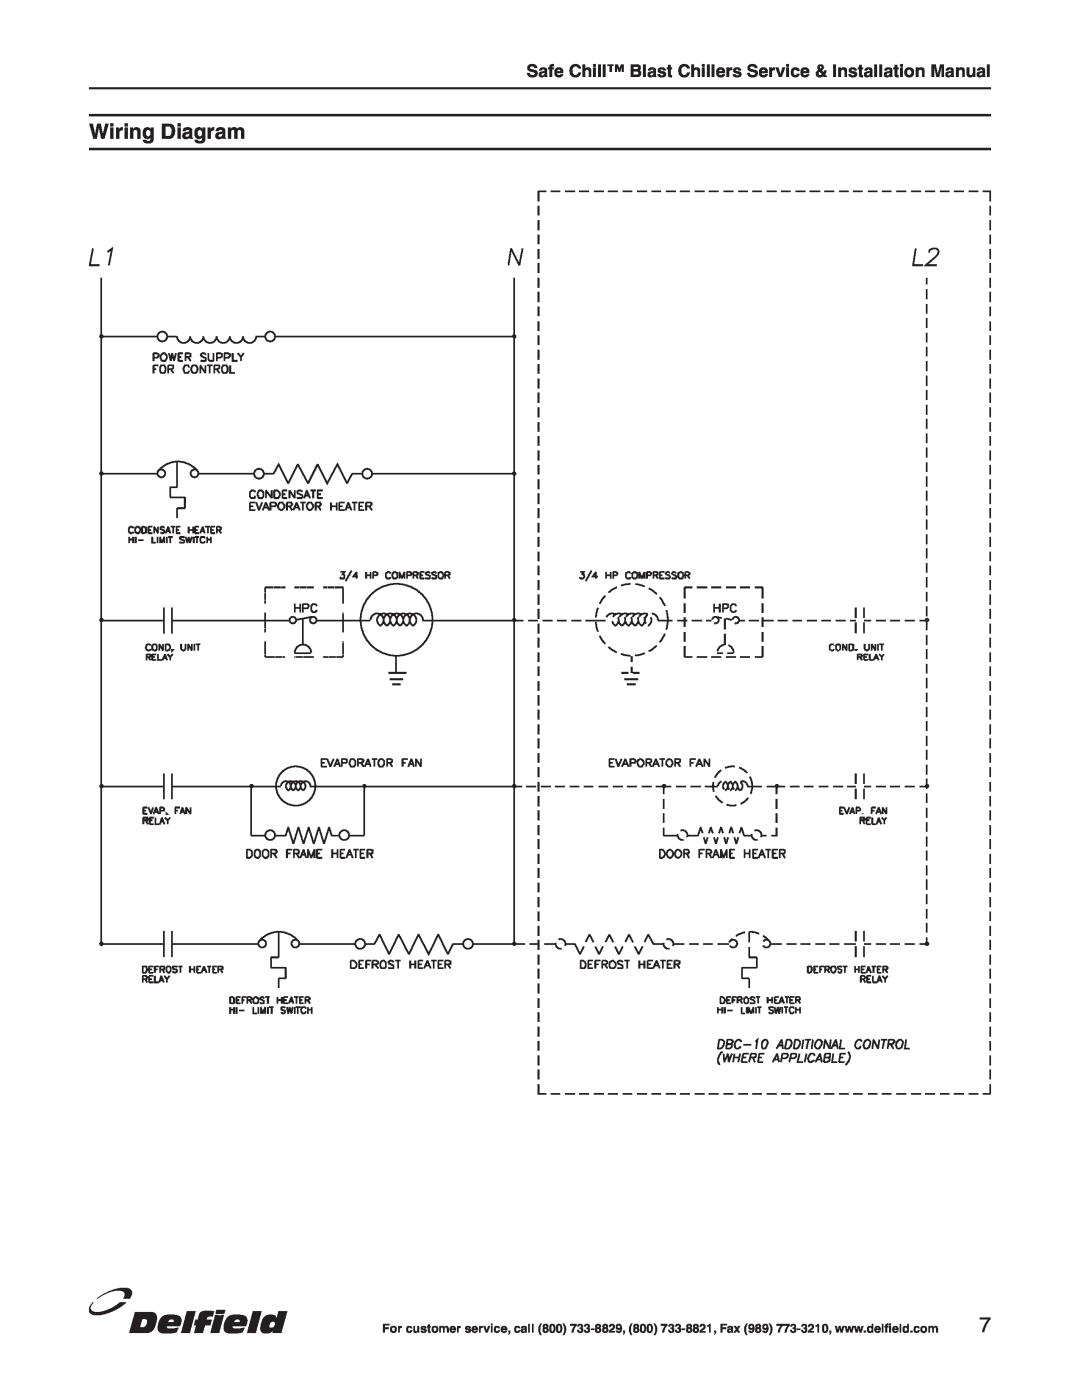 Delfield DBC-10 manual Wiring Diagram 